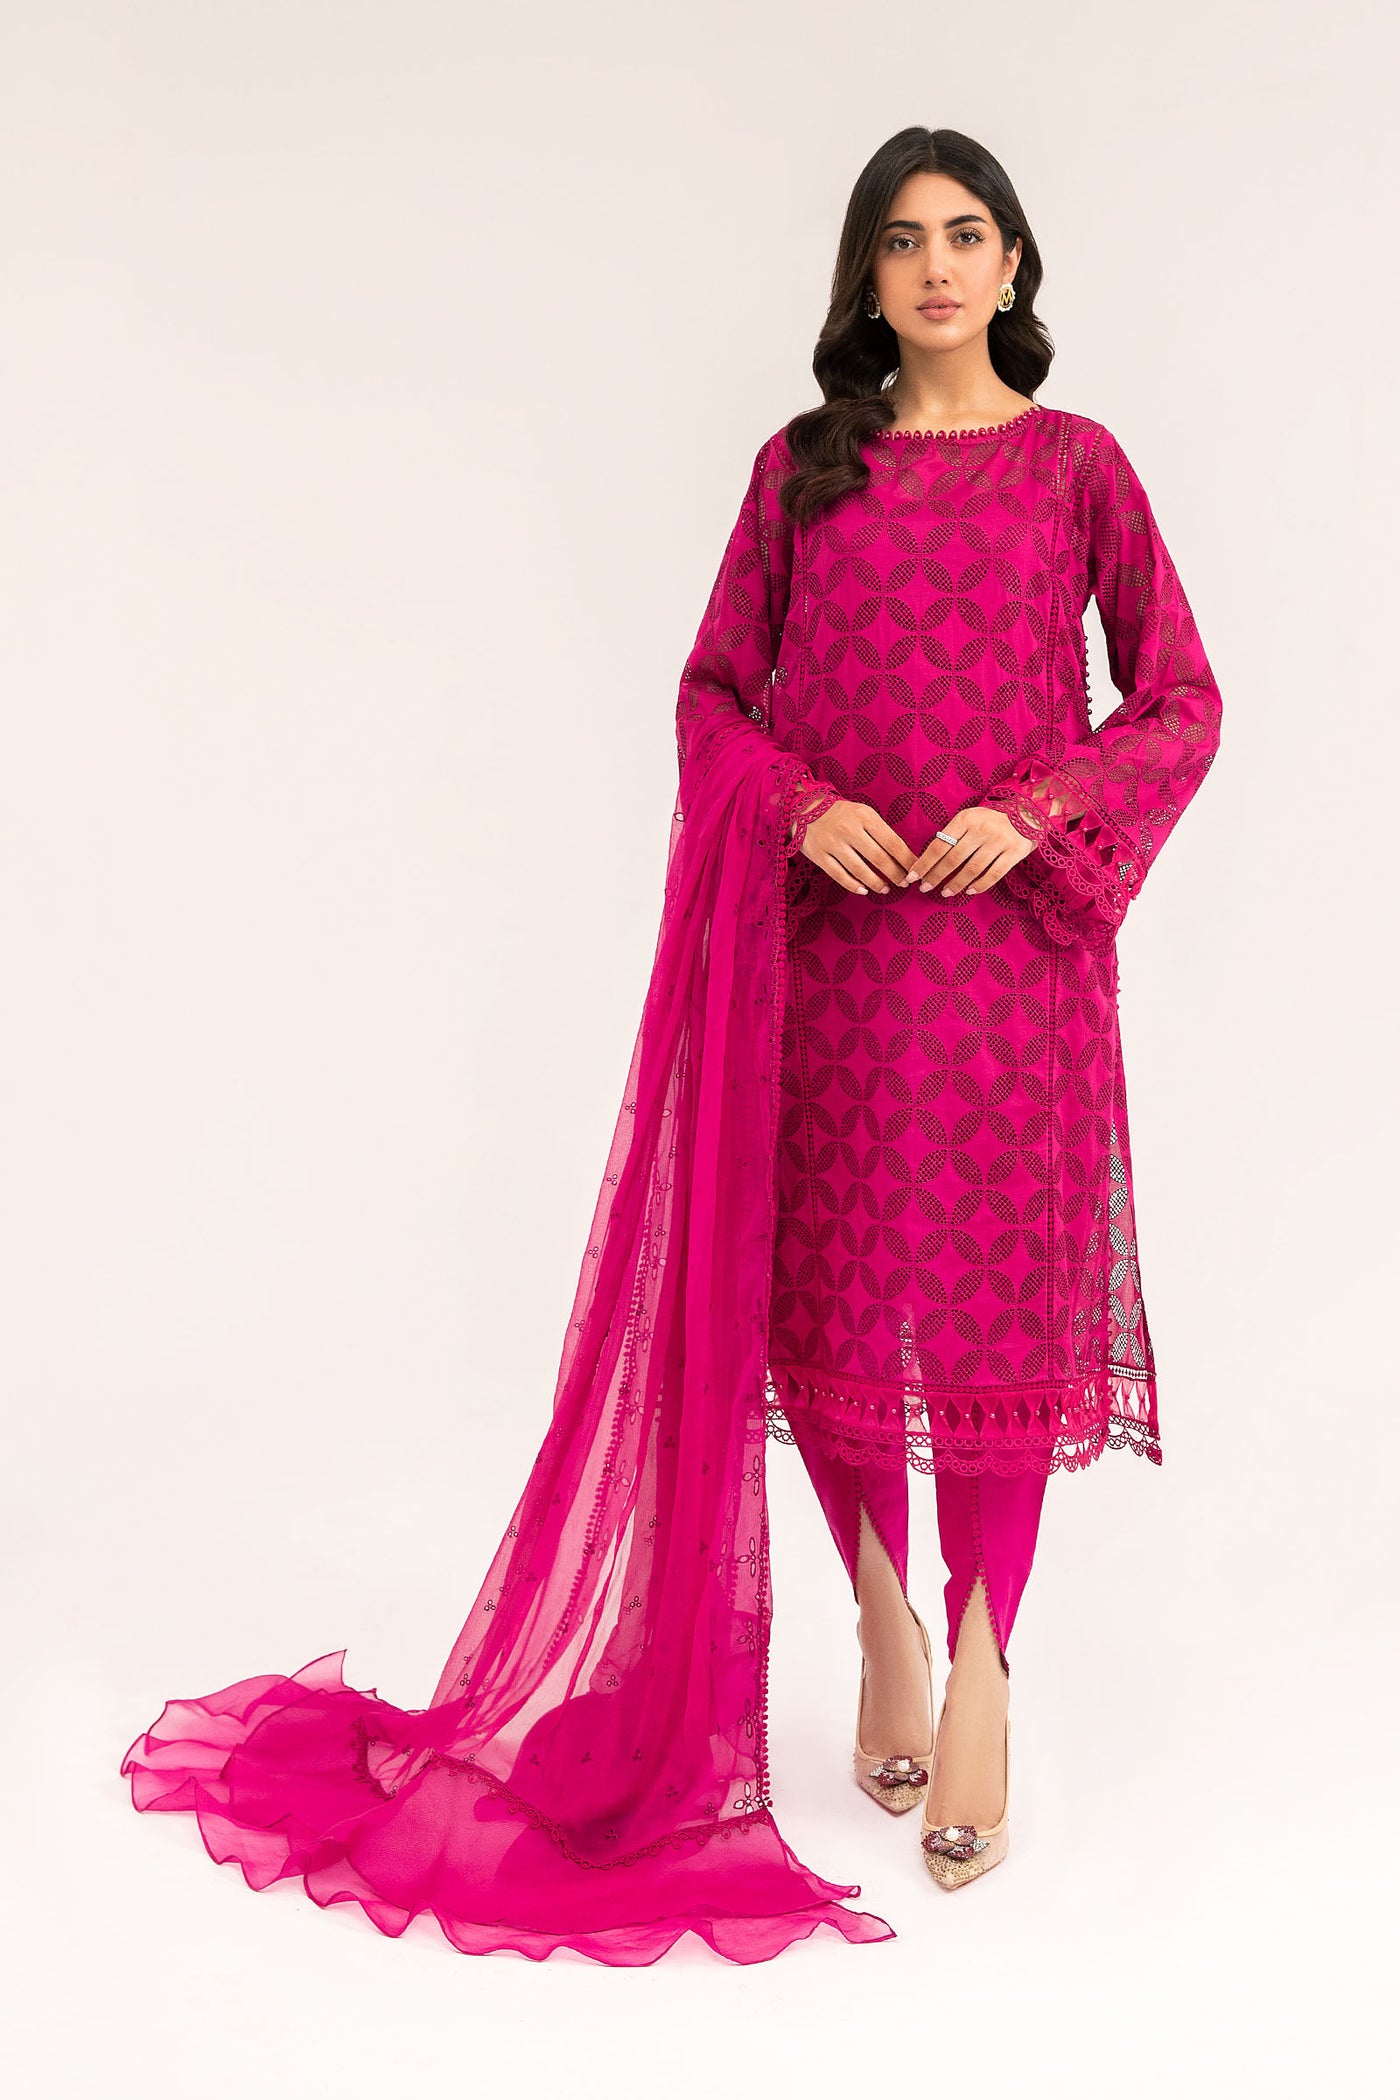 M.Luxe Fabrics Dupatta Pink LF-401-D